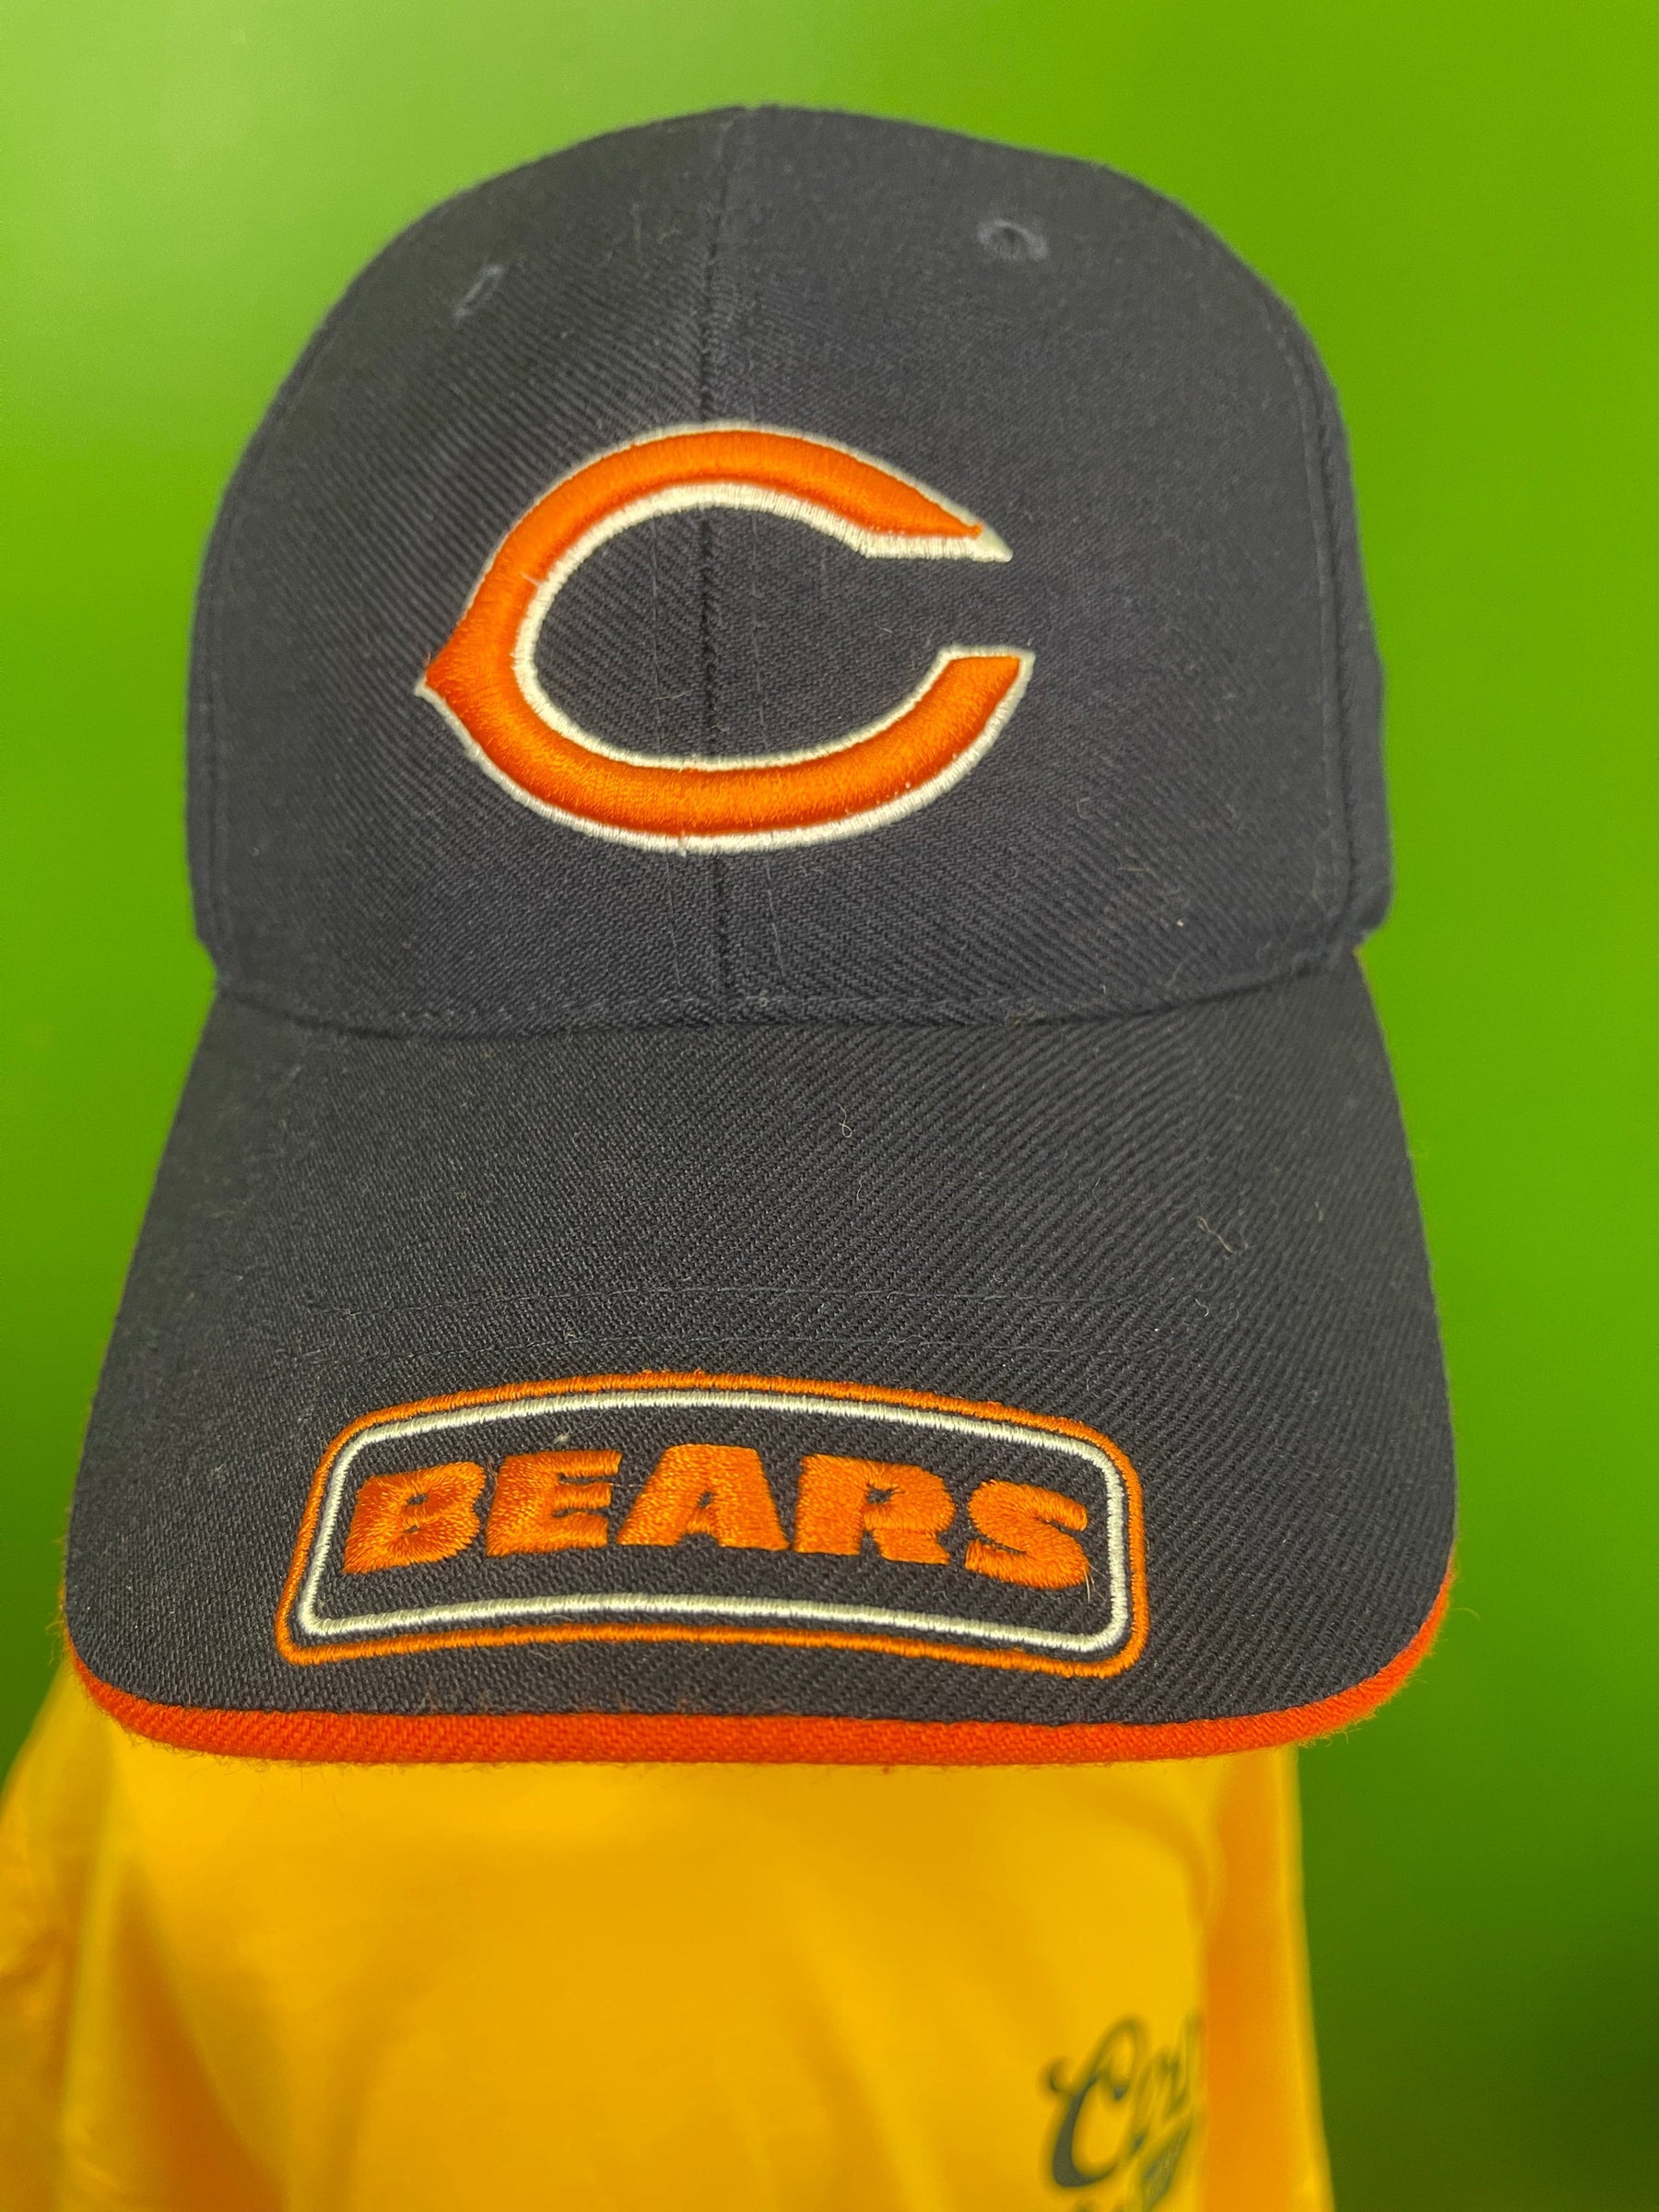 NFL Chicago Bears Strapback Hat/Cap OSFM